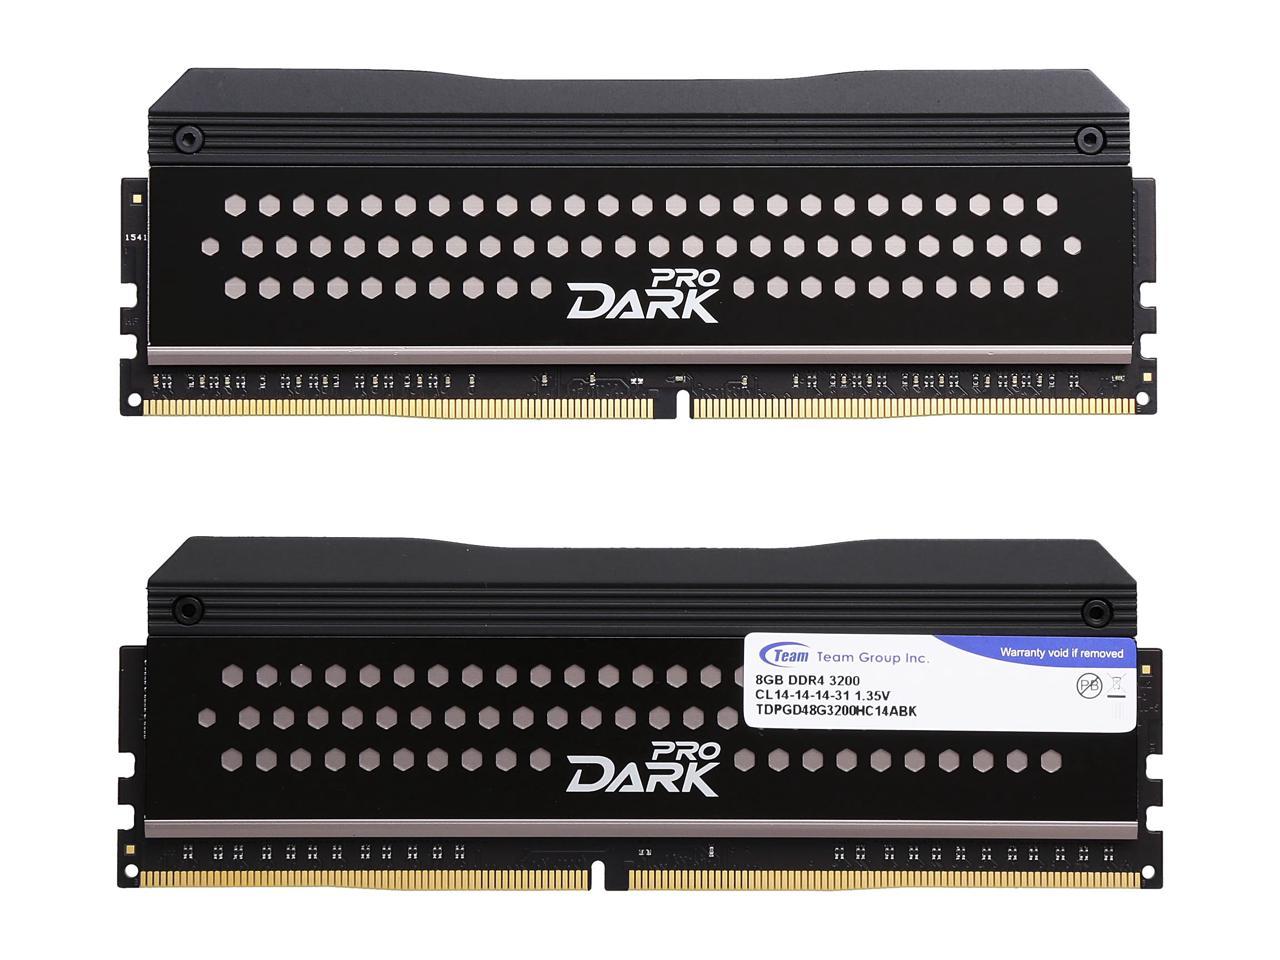 Team T-Force DARK Pro 16GB (2 x 8GB) 288-Pin DDR4 SDRAM DDR4 3200 (PC4 25600) Desktop Memory Model TDPGD416G3200HC14ADC01